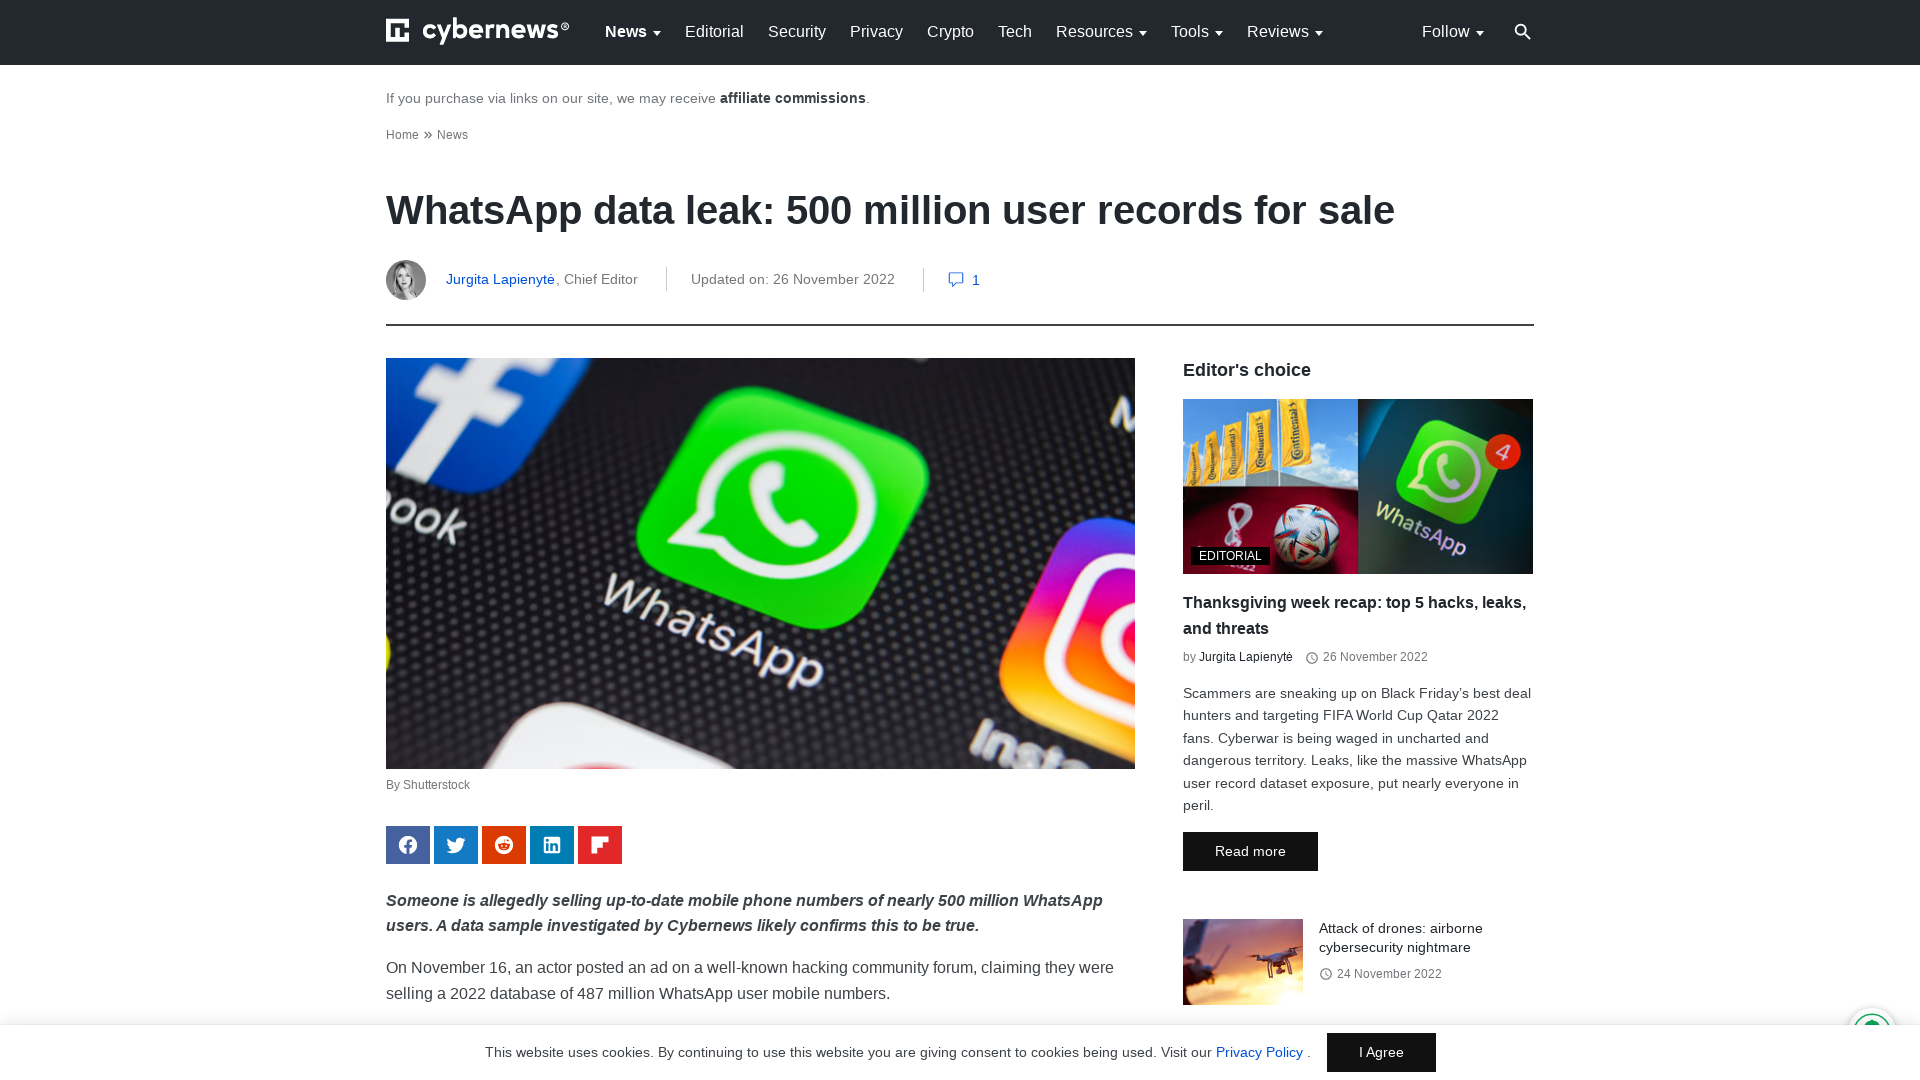 WhatsApp data leak: 500 million user records for sale | Cybernews